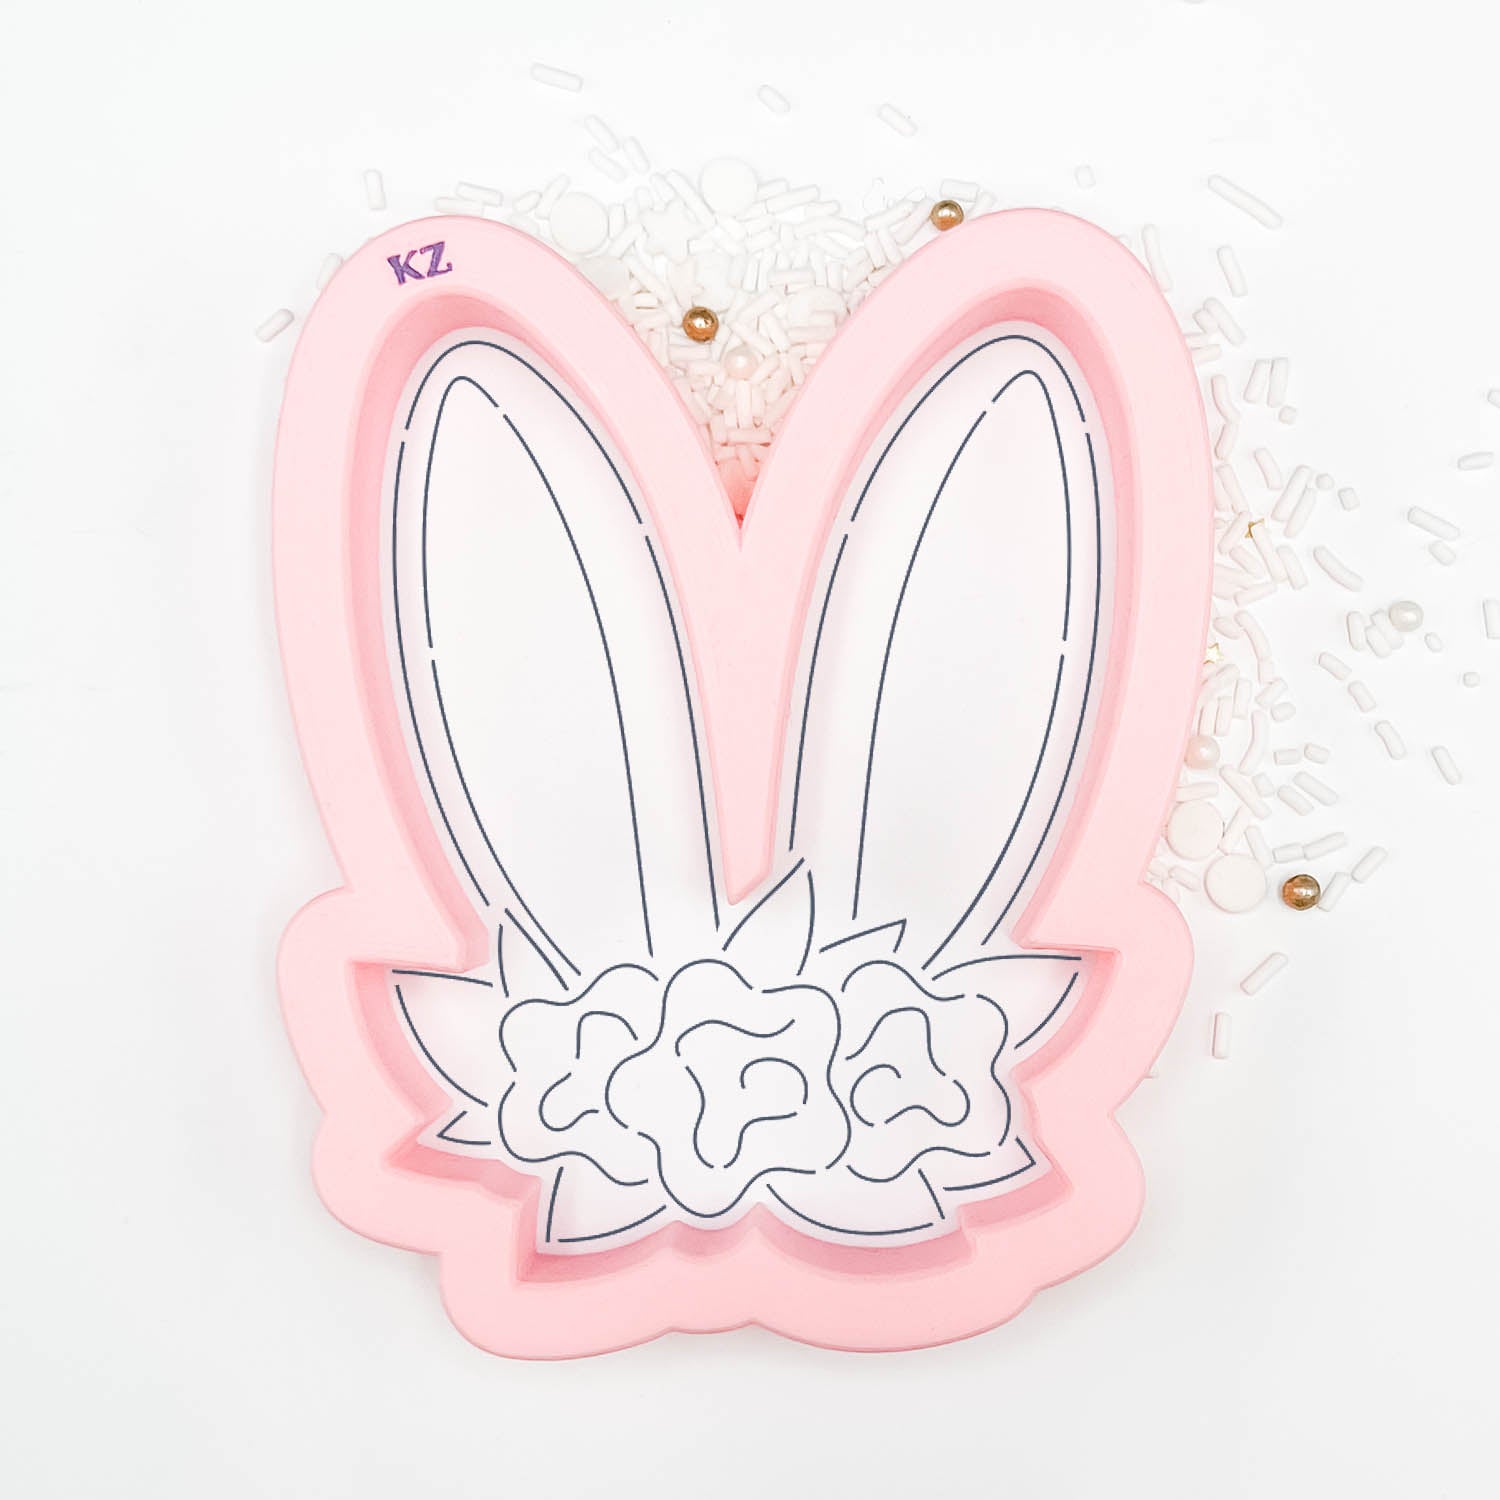 Bunny Ears Cutter/Stencil